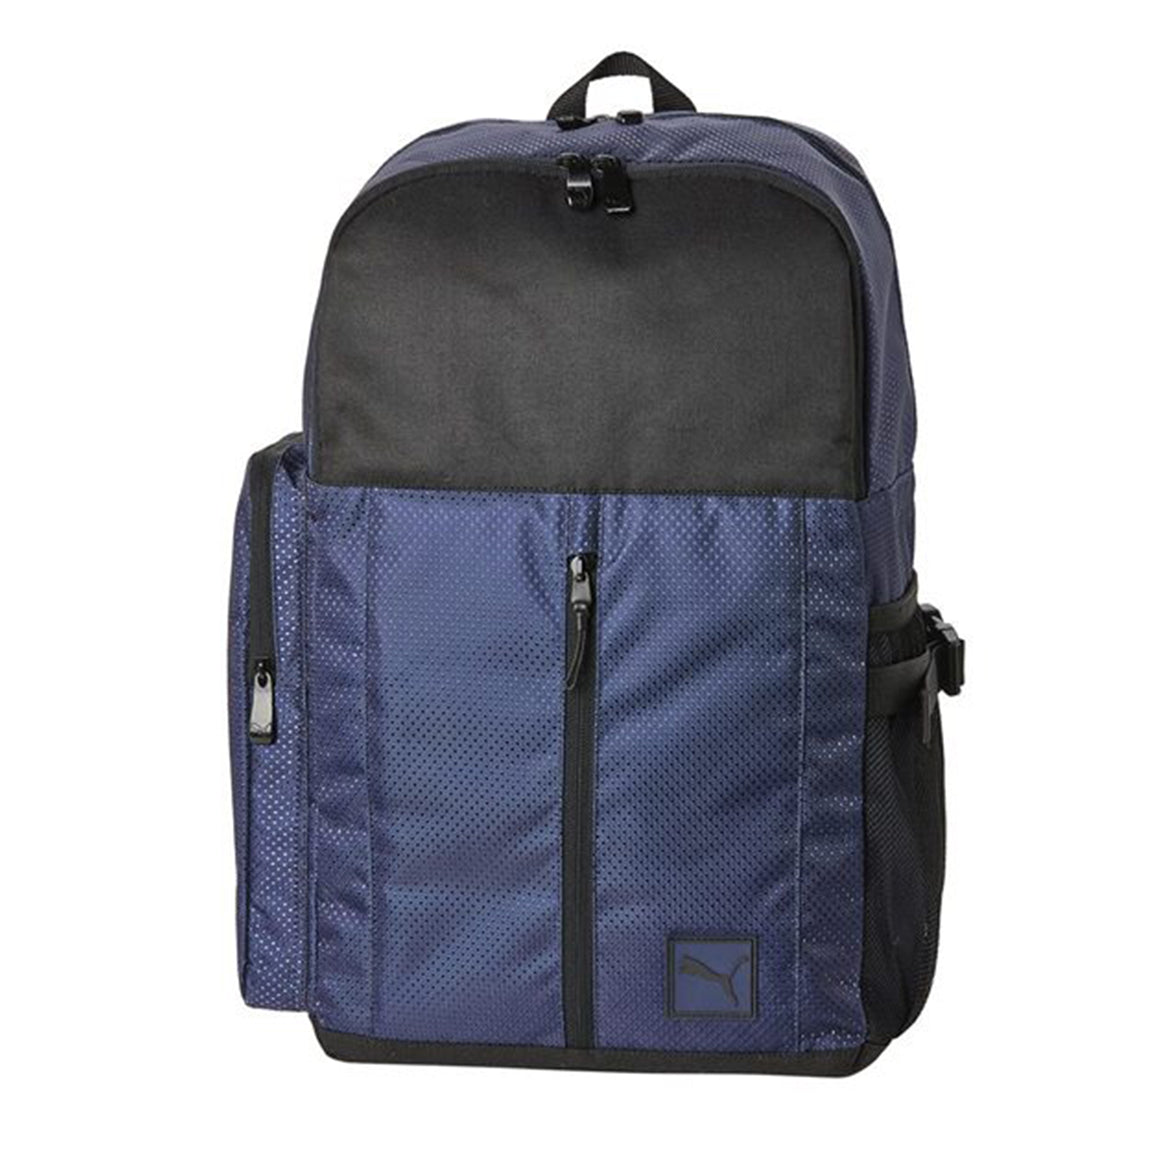 24L Backpack